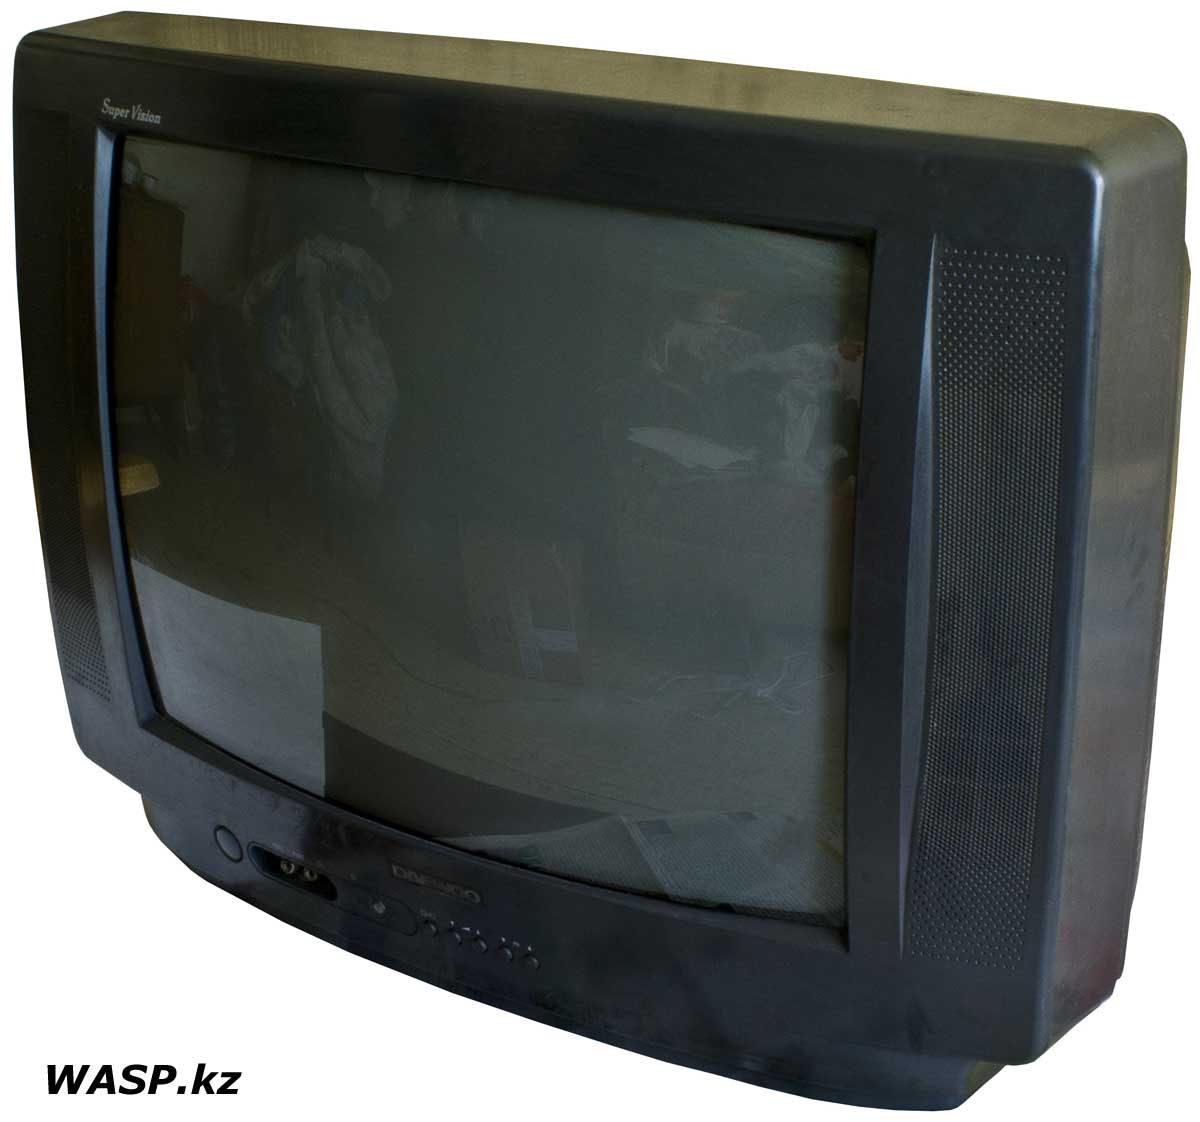 Daewoo 20T1 полное описание старого телевизора